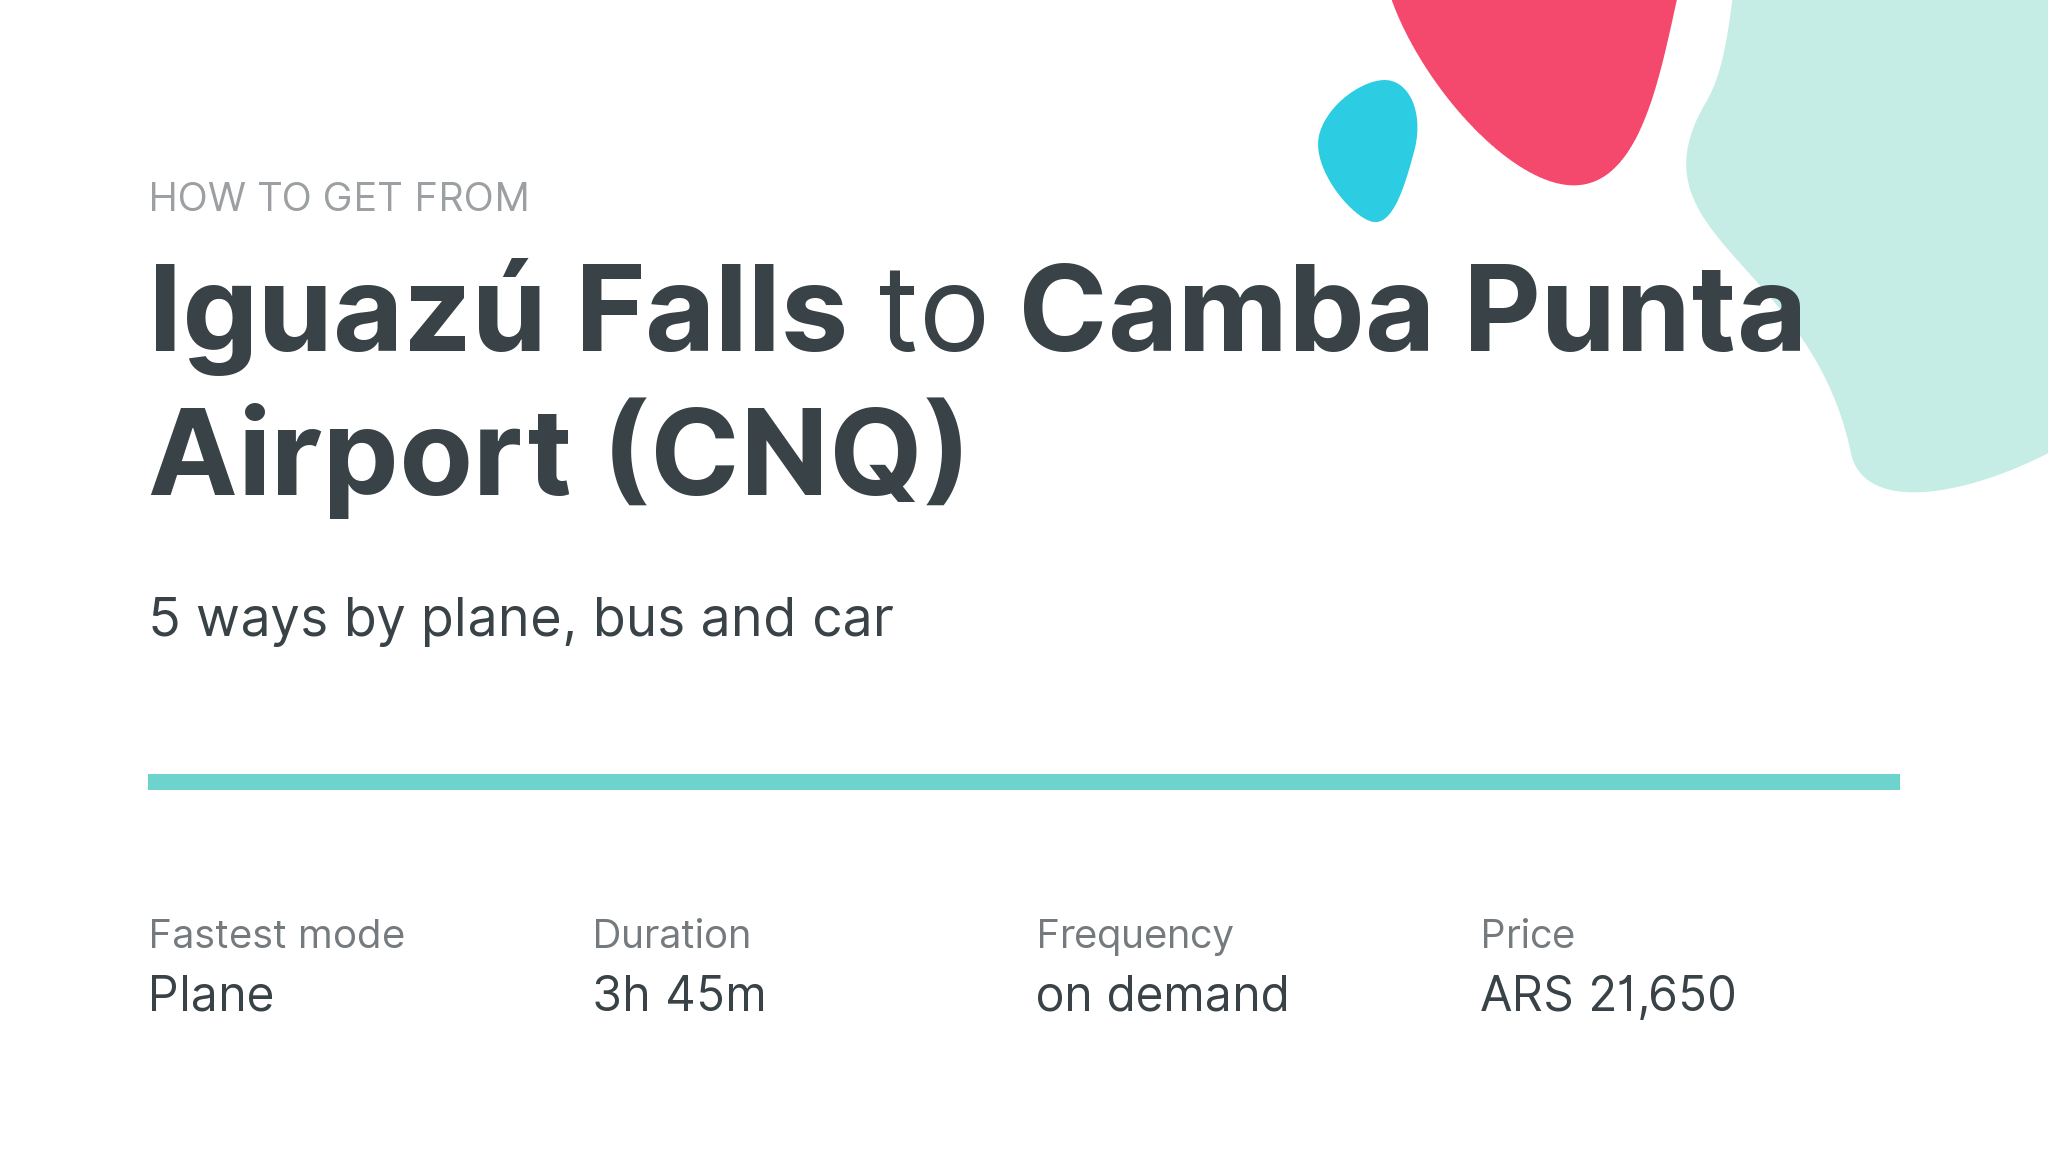 How do I get from Iguazú Falls to Camba Punta Airport (CNQ)